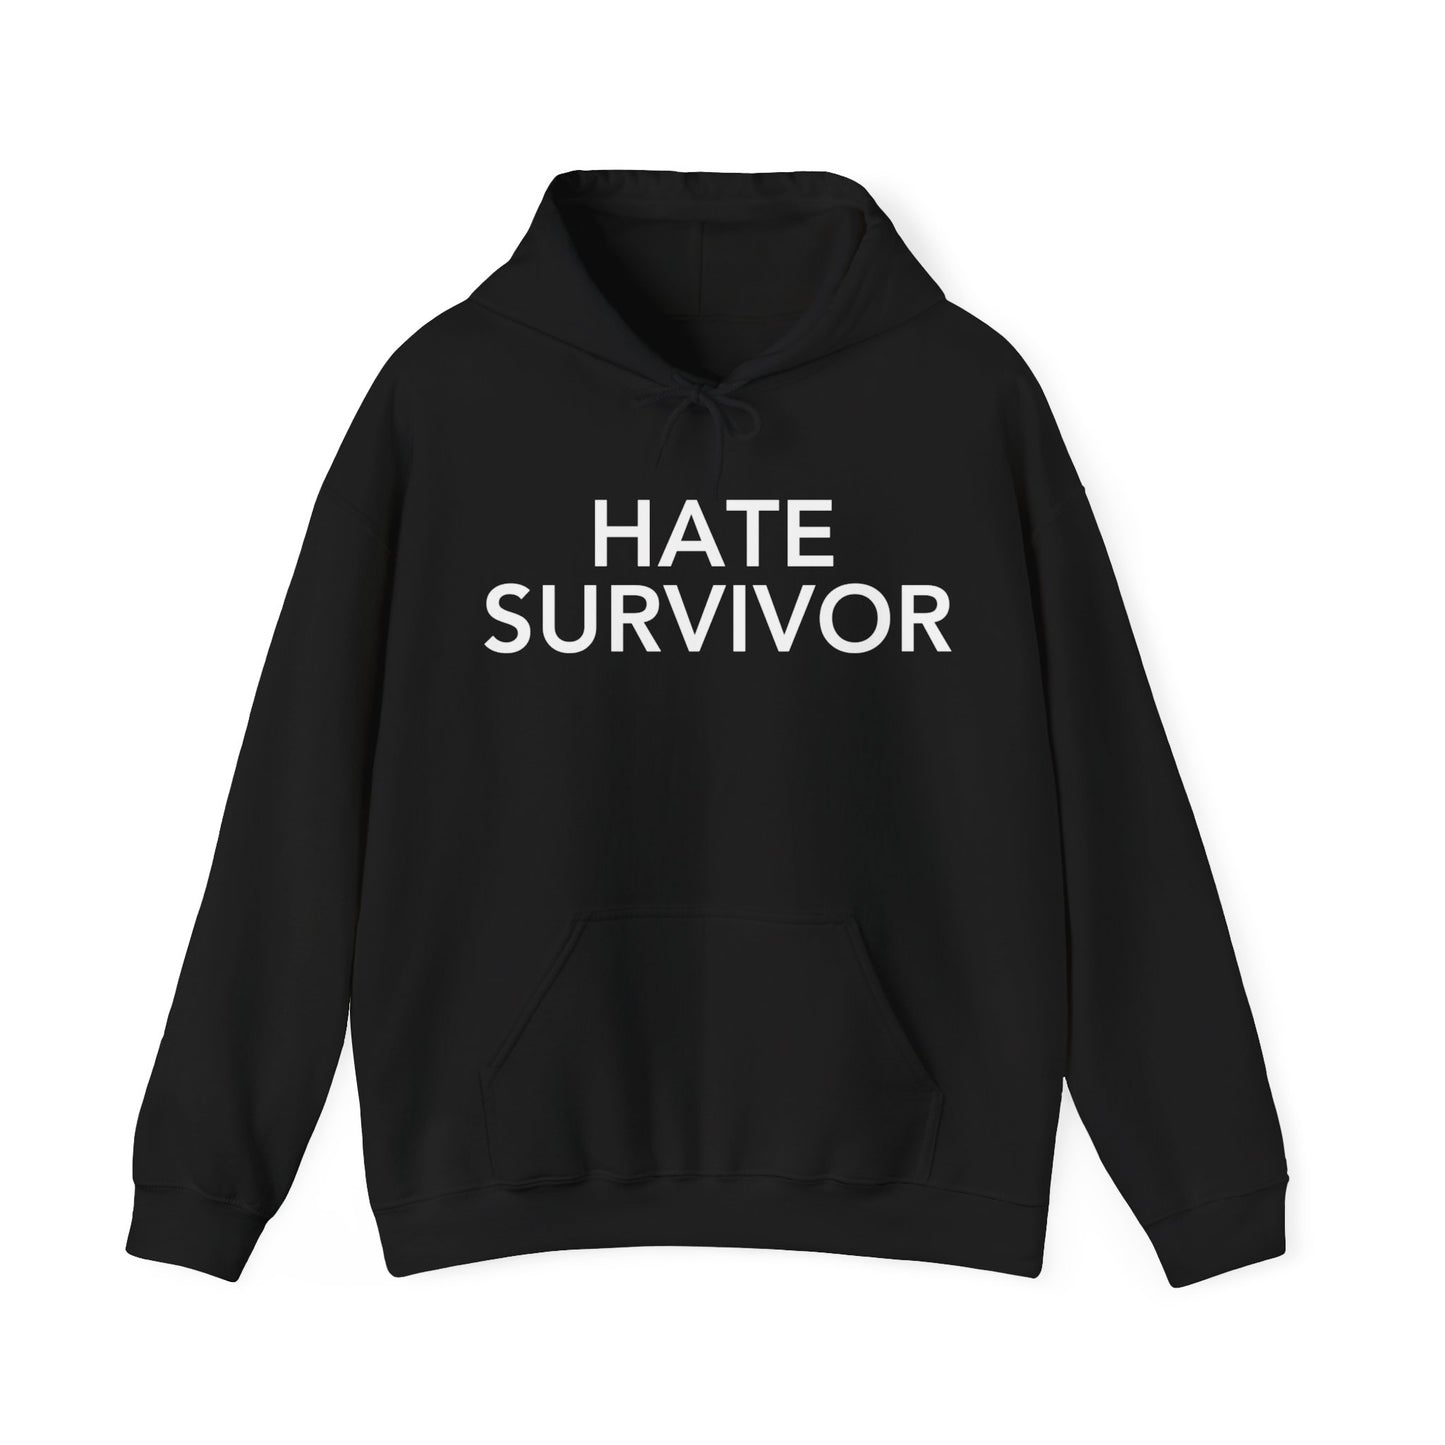 Hate Survivor Hoodie